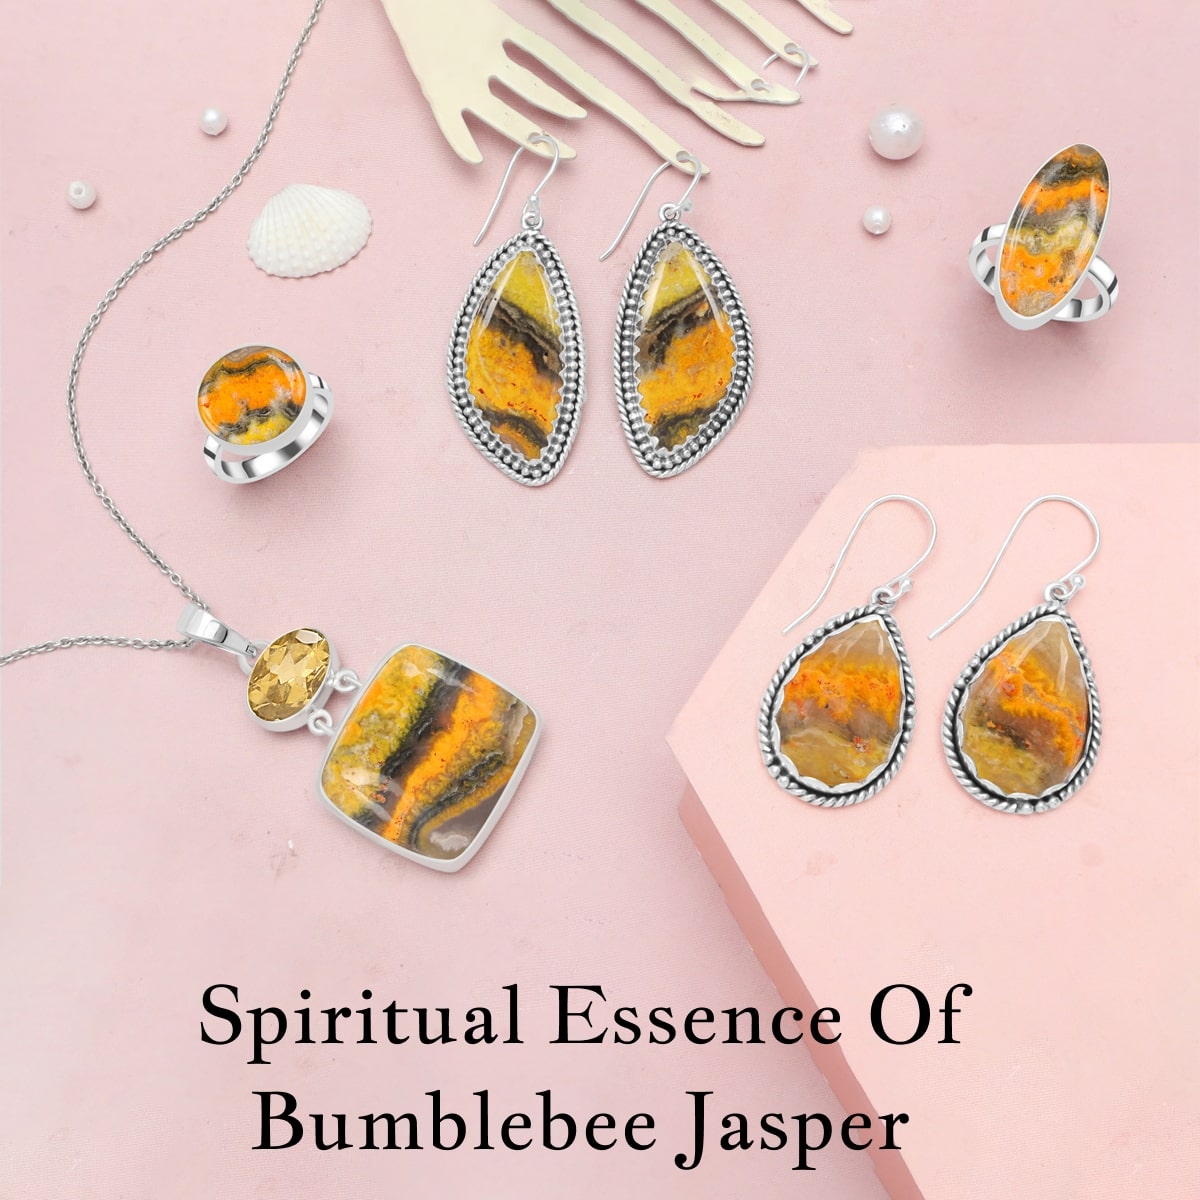 Bumblebee Jasper Spiritual Properties and Benefits